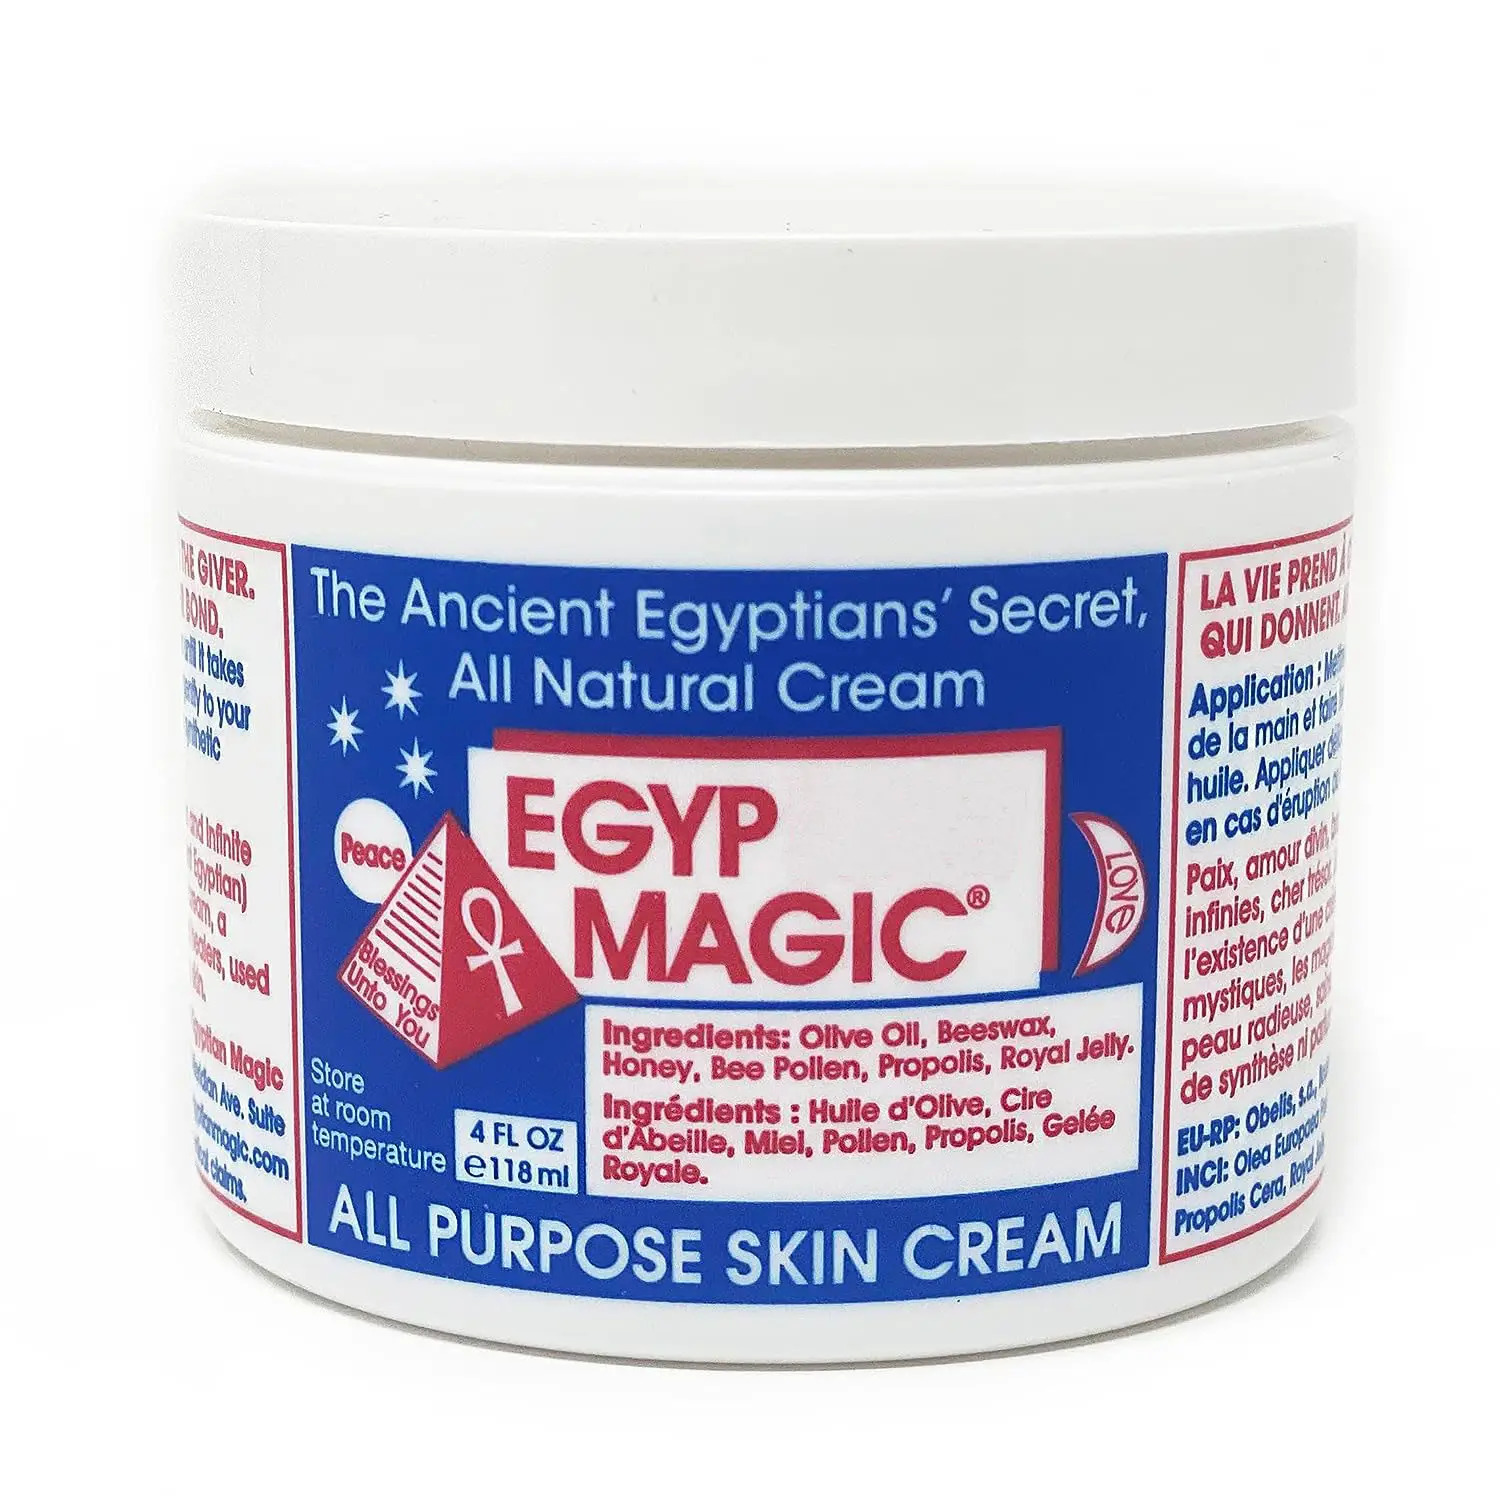 Mısır sihirli krem tüm doğal antik sihirli krem tüm amaçlı cilt kremi vücut cilt losyonu 4 FL.OZ